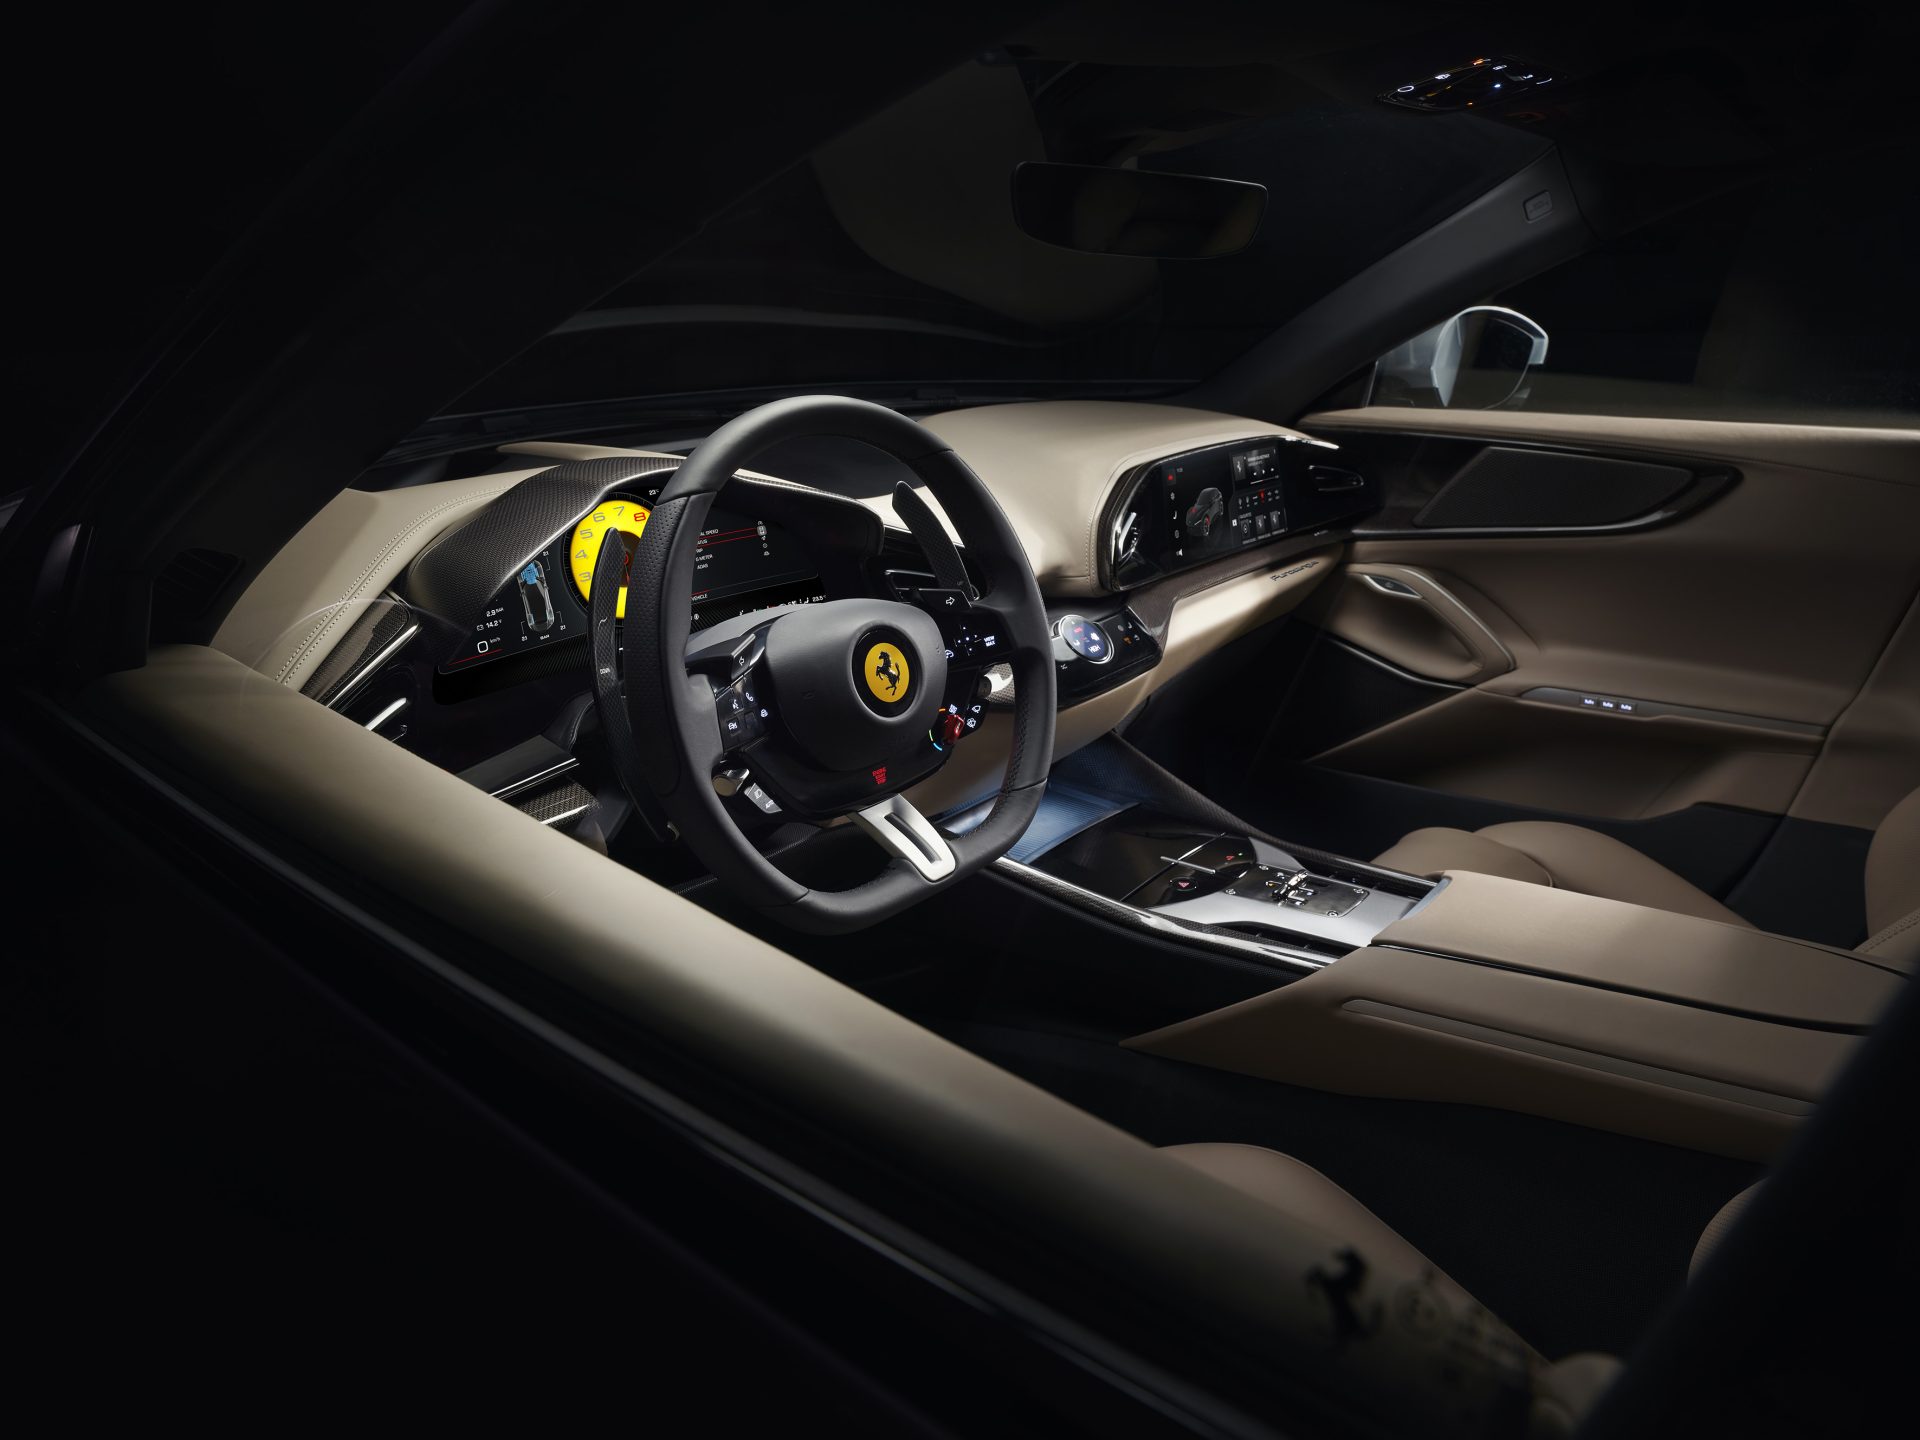 15 Interior through drivers window HR A4 1 Ferrari Purosangue: Μία πρακτική καθαρόαιμη Ferrari